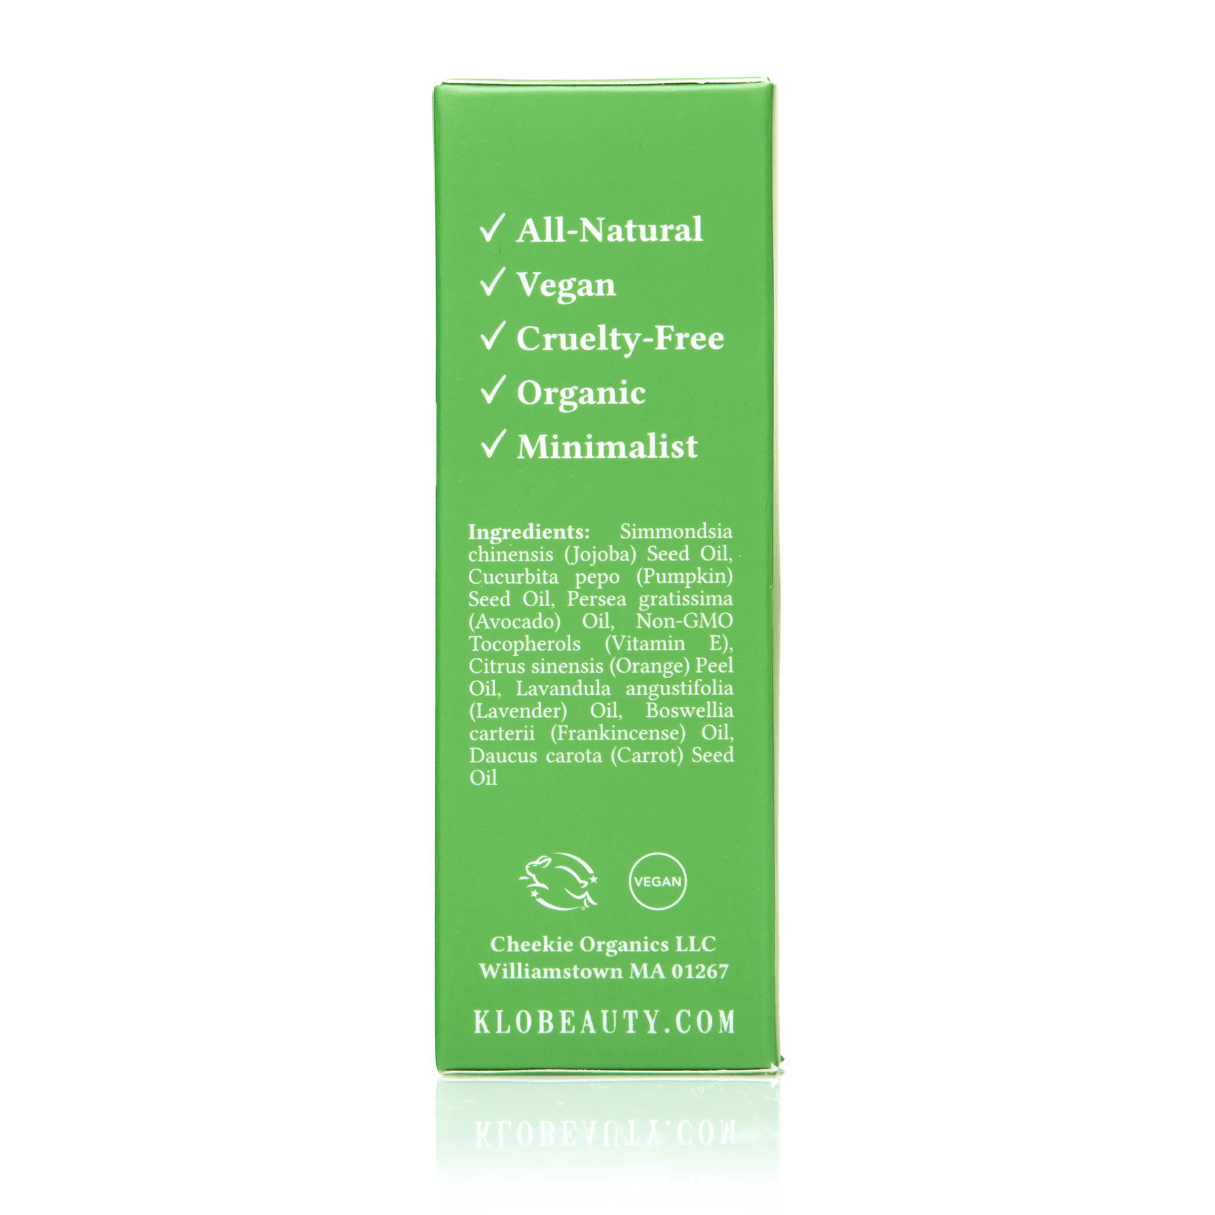 Klo Organic Beauty serum normal-dry ingredients on box.